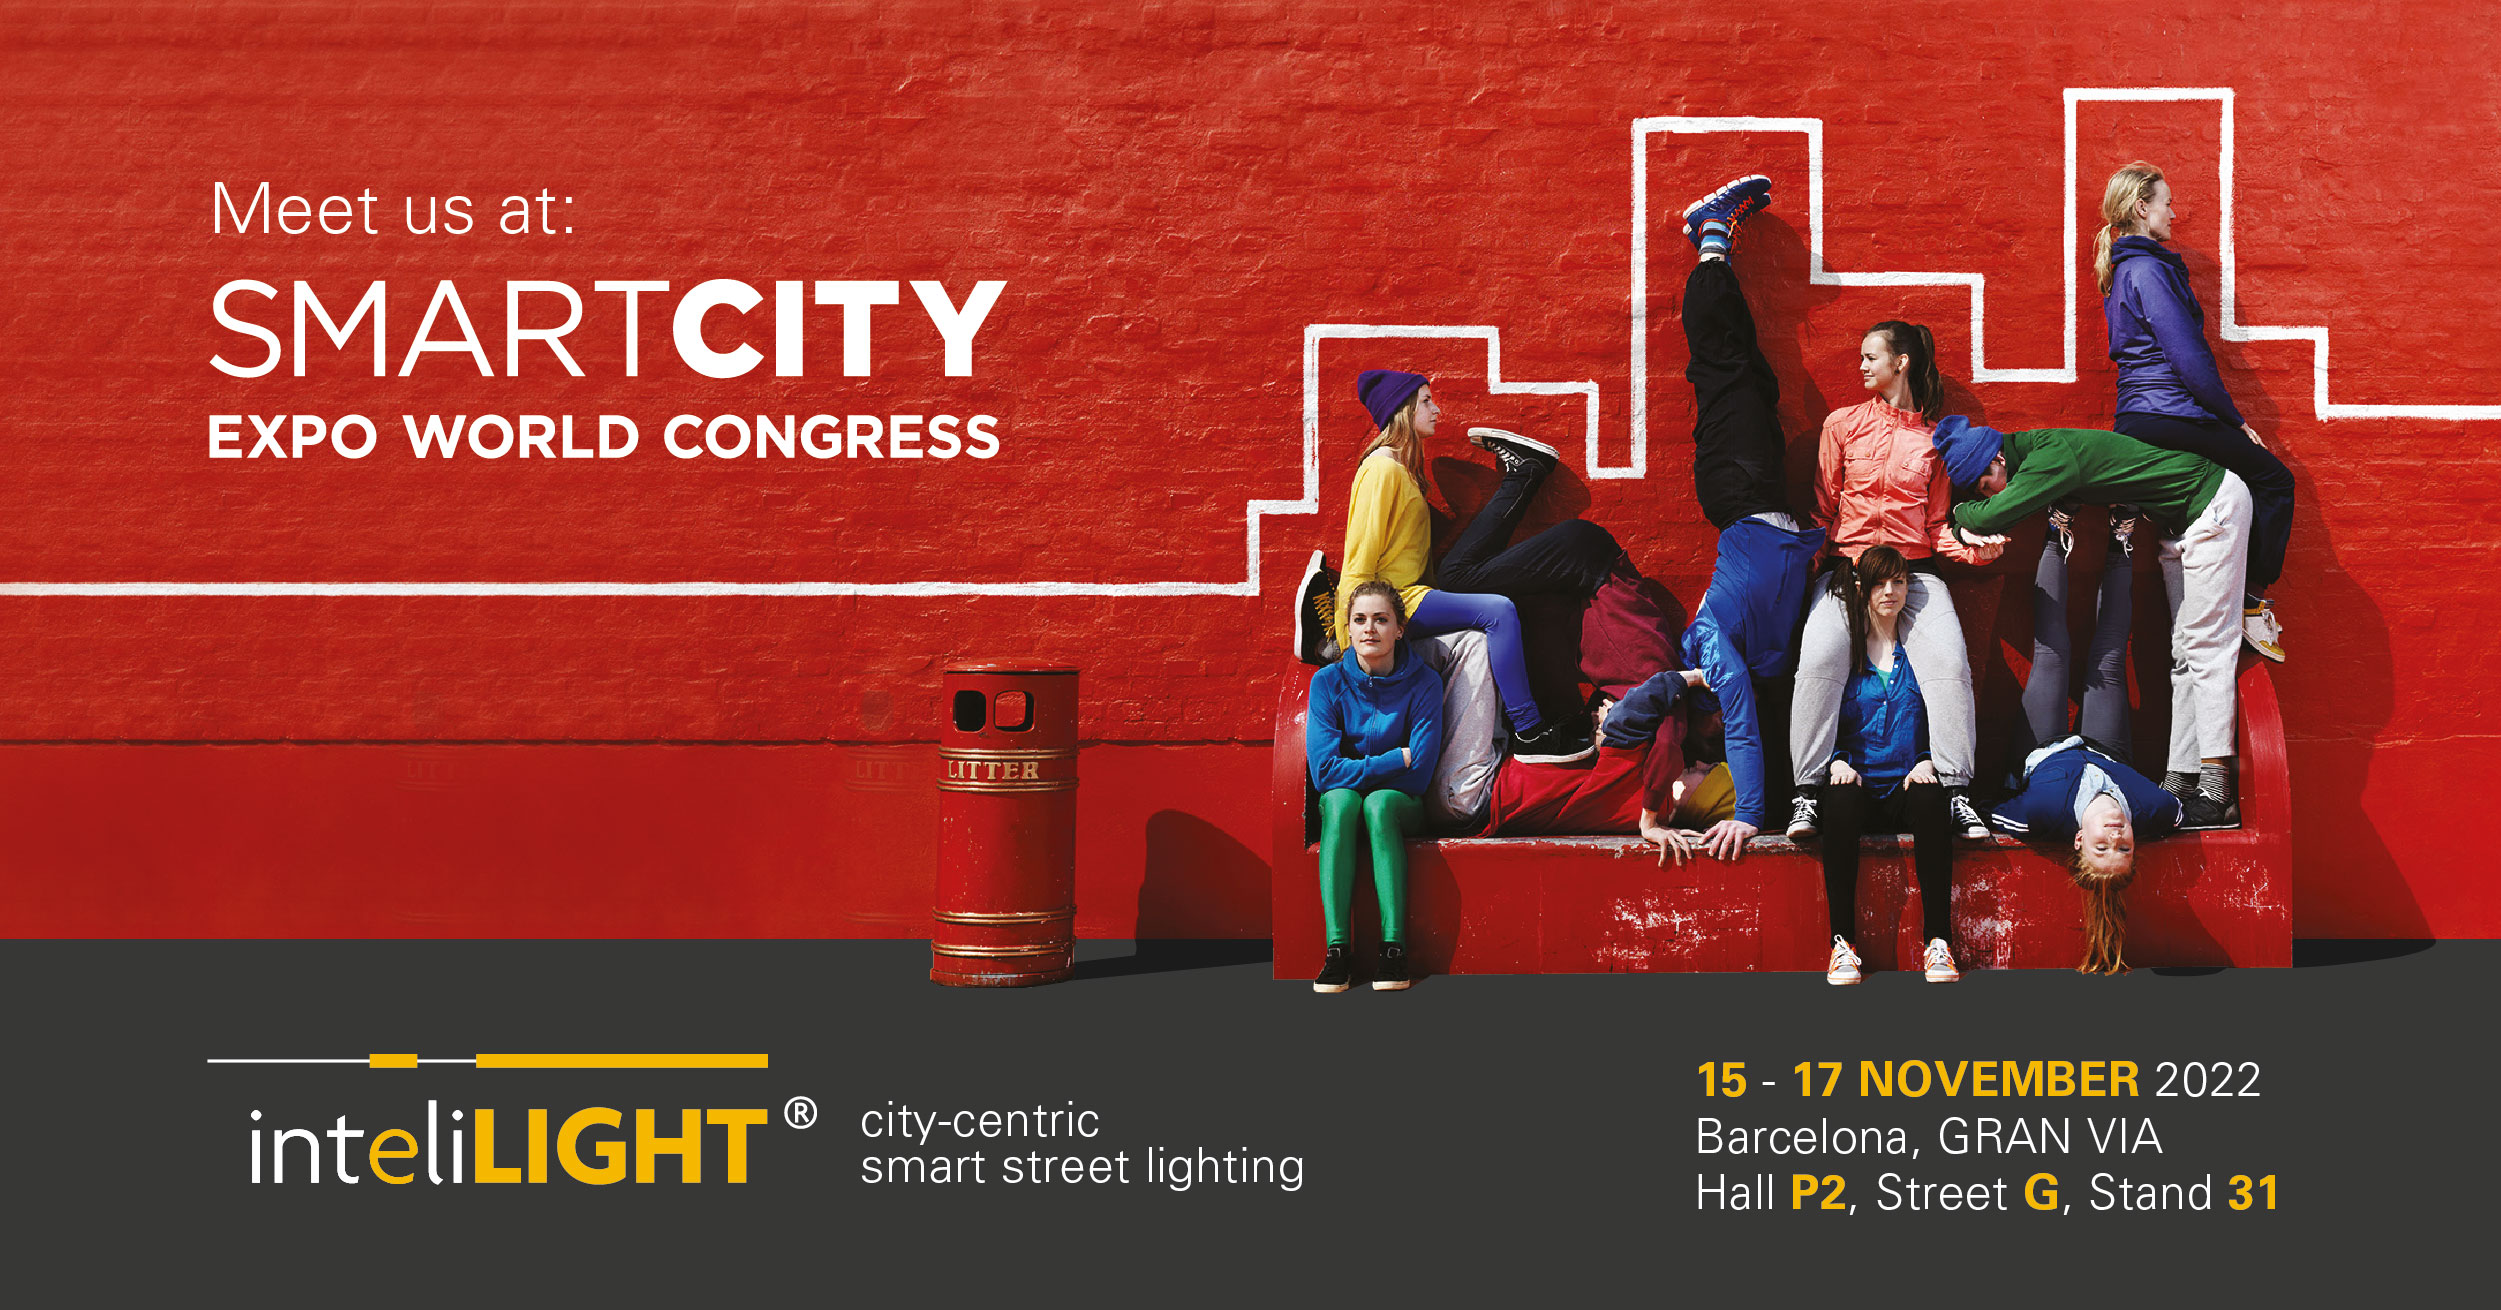 inteliLIGHT city-centric street lighting innovation during Smart City Expo World Congress 2022